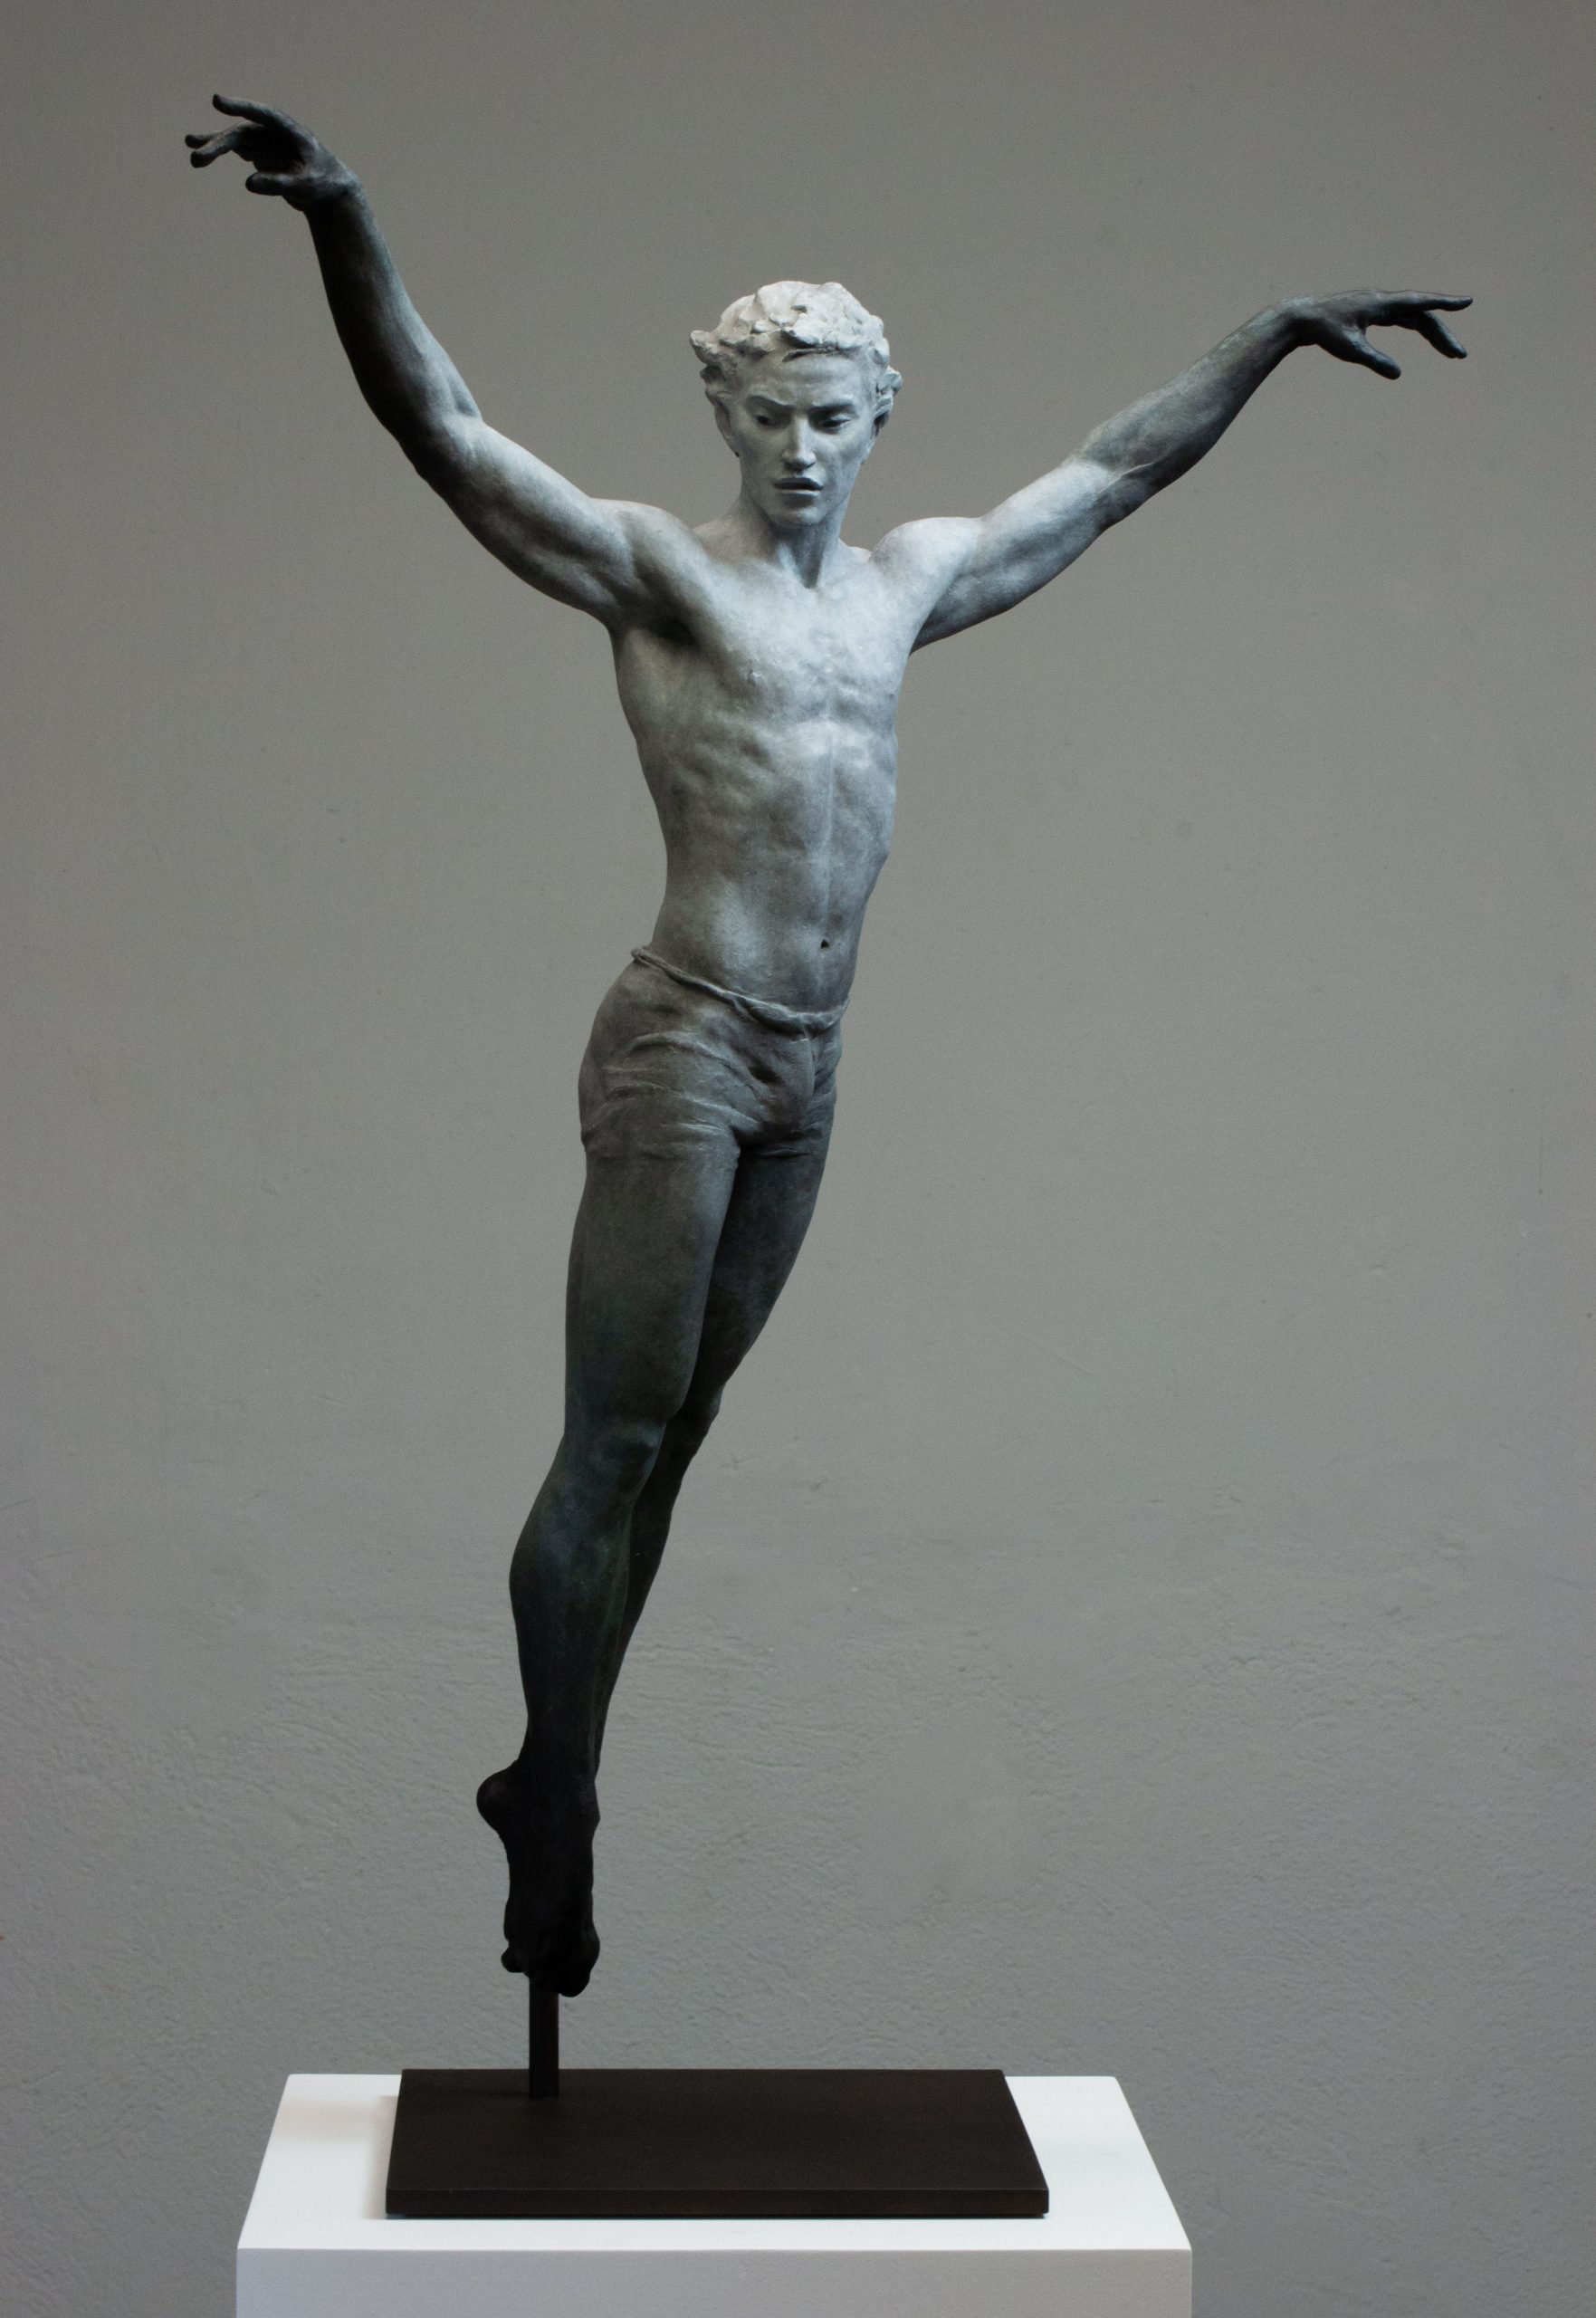 Coderch & Malavia Artiste<br />
Sculpture Bronze<br />
Moonlight Shadow<br />
@ Marciano Contemporary